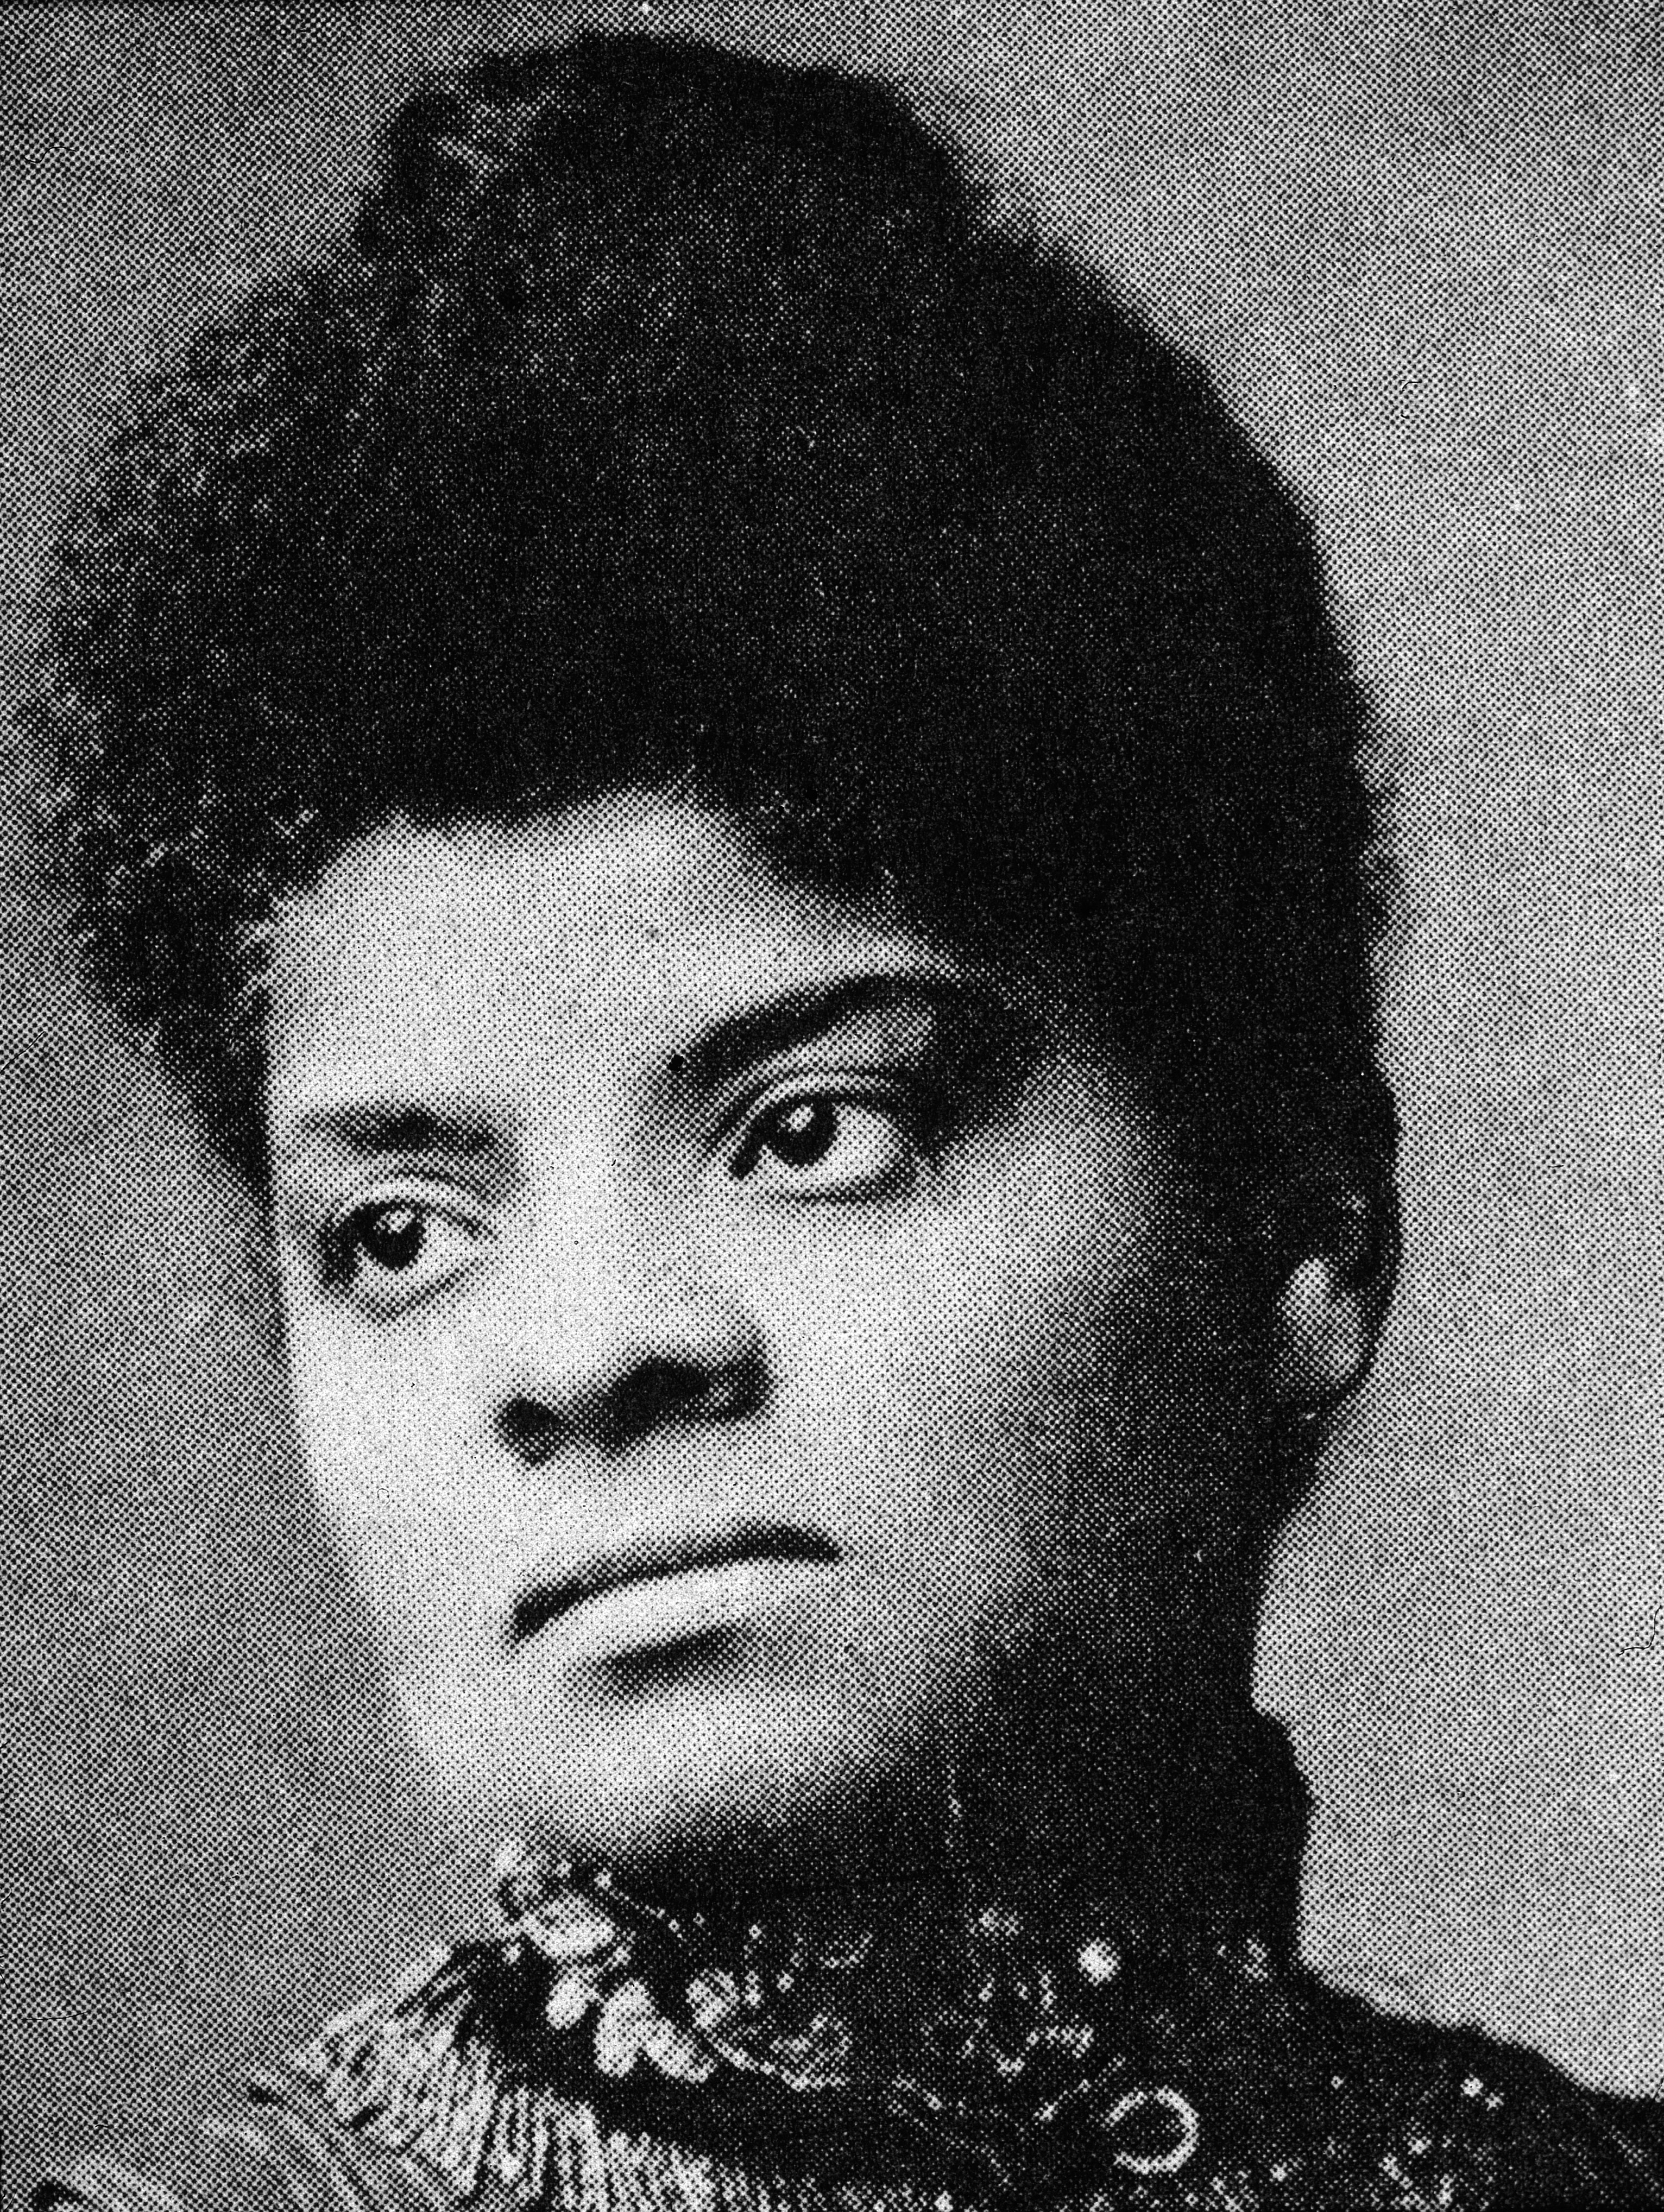 Portrait of American journalist, suffragist and Progressive activist Ida Wells Barnett, also known as Ida B. Wells, in the 1890s. (R. Gates—Hulton Archive/Getty Images)